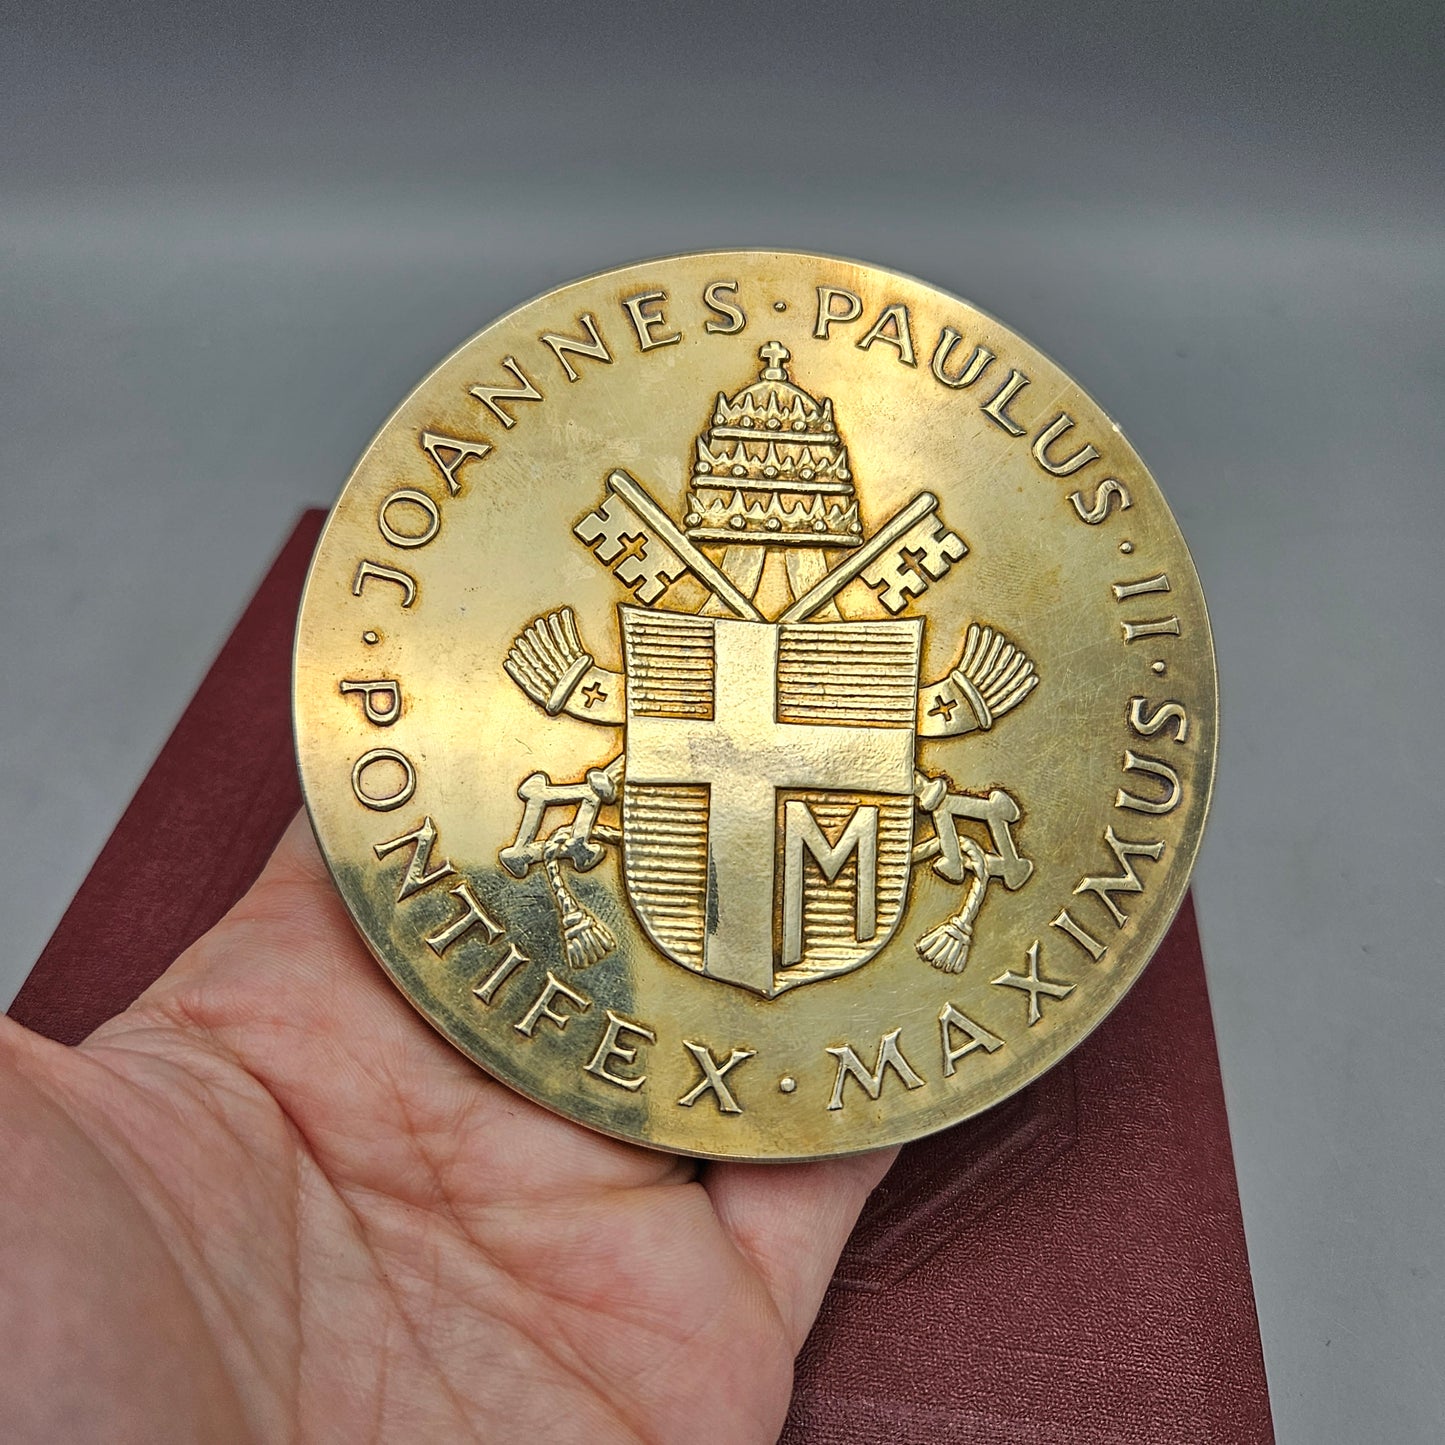 Pope John Paul Medal in Box